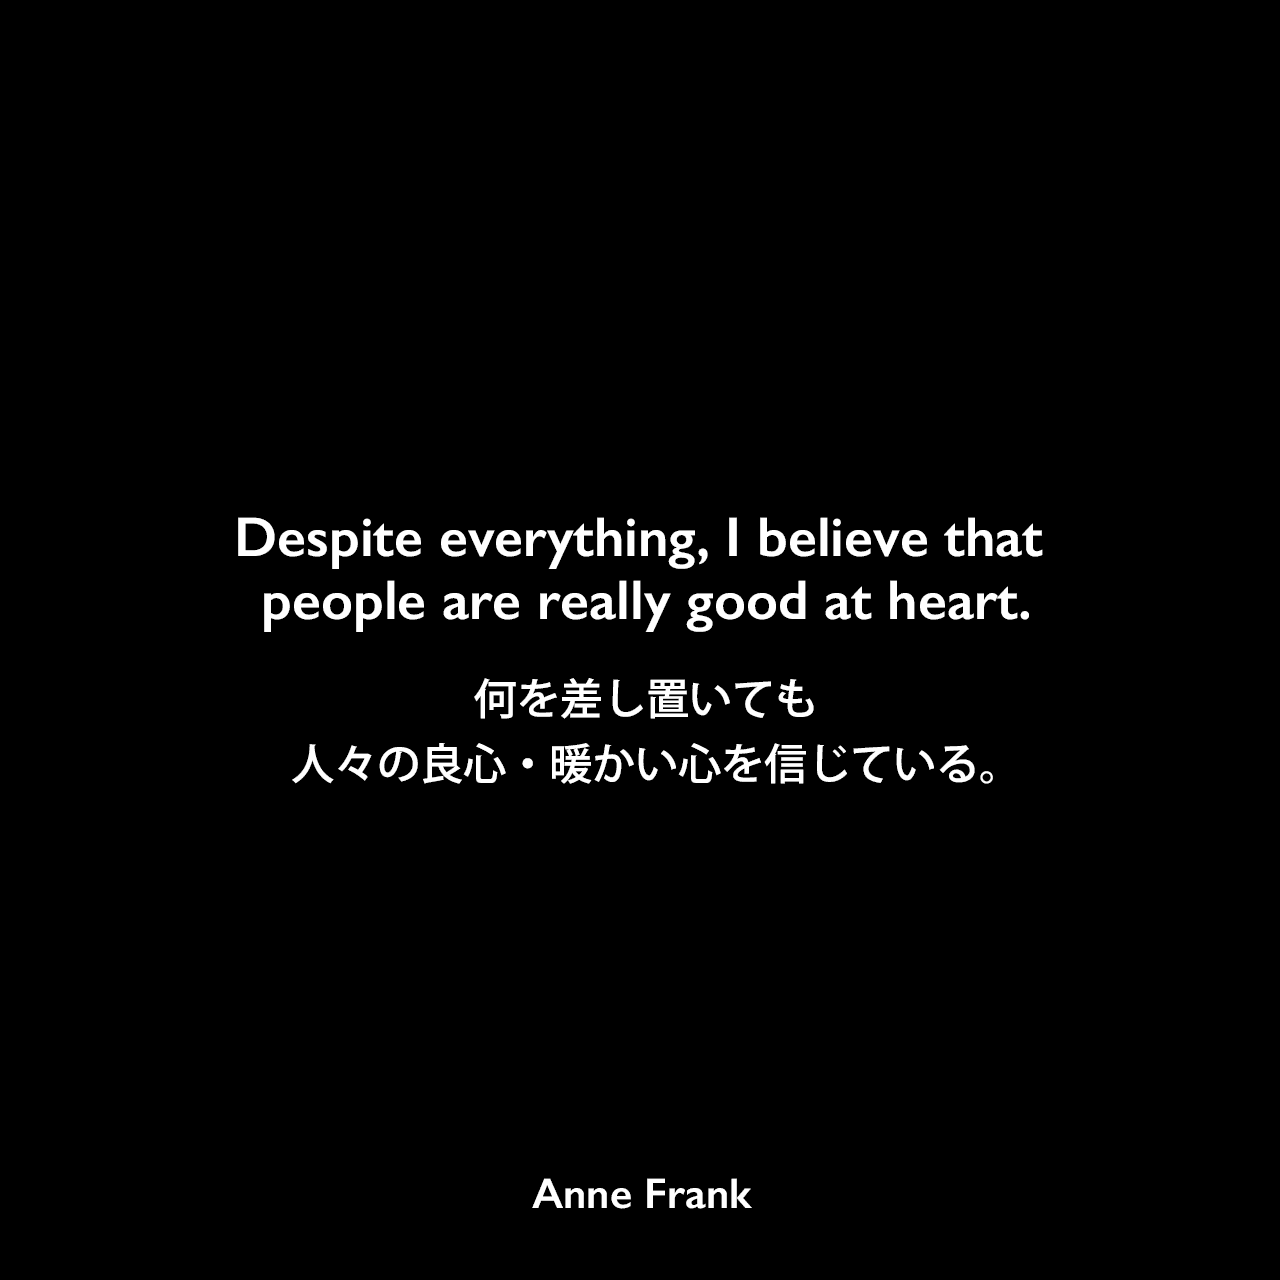 Despite everything, I believe that people are really good at heart.何を差し置いても、人々の良心・暖かい心を信じている。Anne Frank